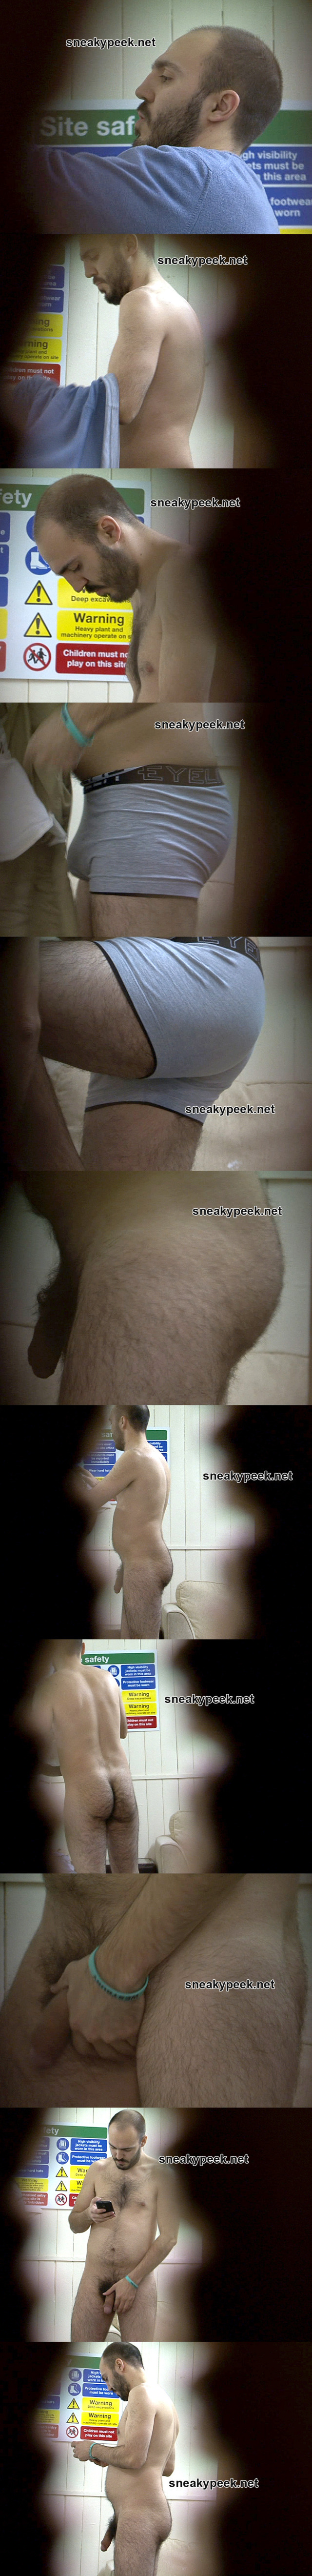 Hairy Hidden Cam Nude - hairy man caught undressing naked locker room - Spycamfromguys, hidden cams  spying on men